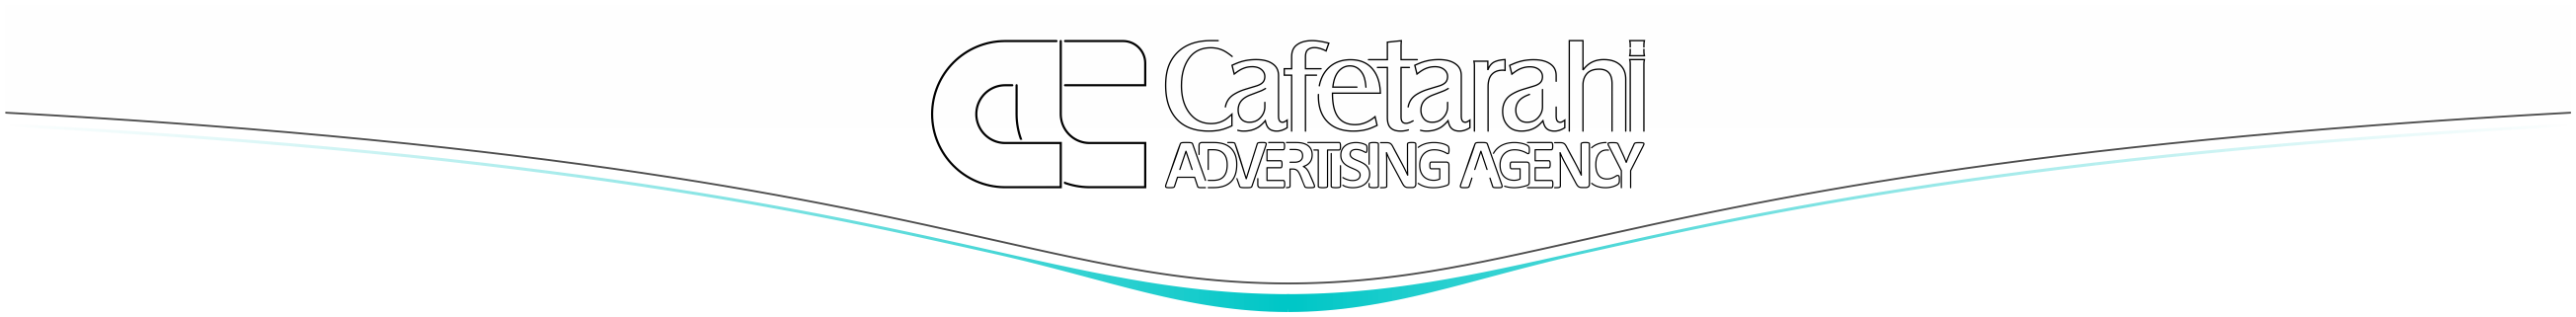 Logo Cafetarahi